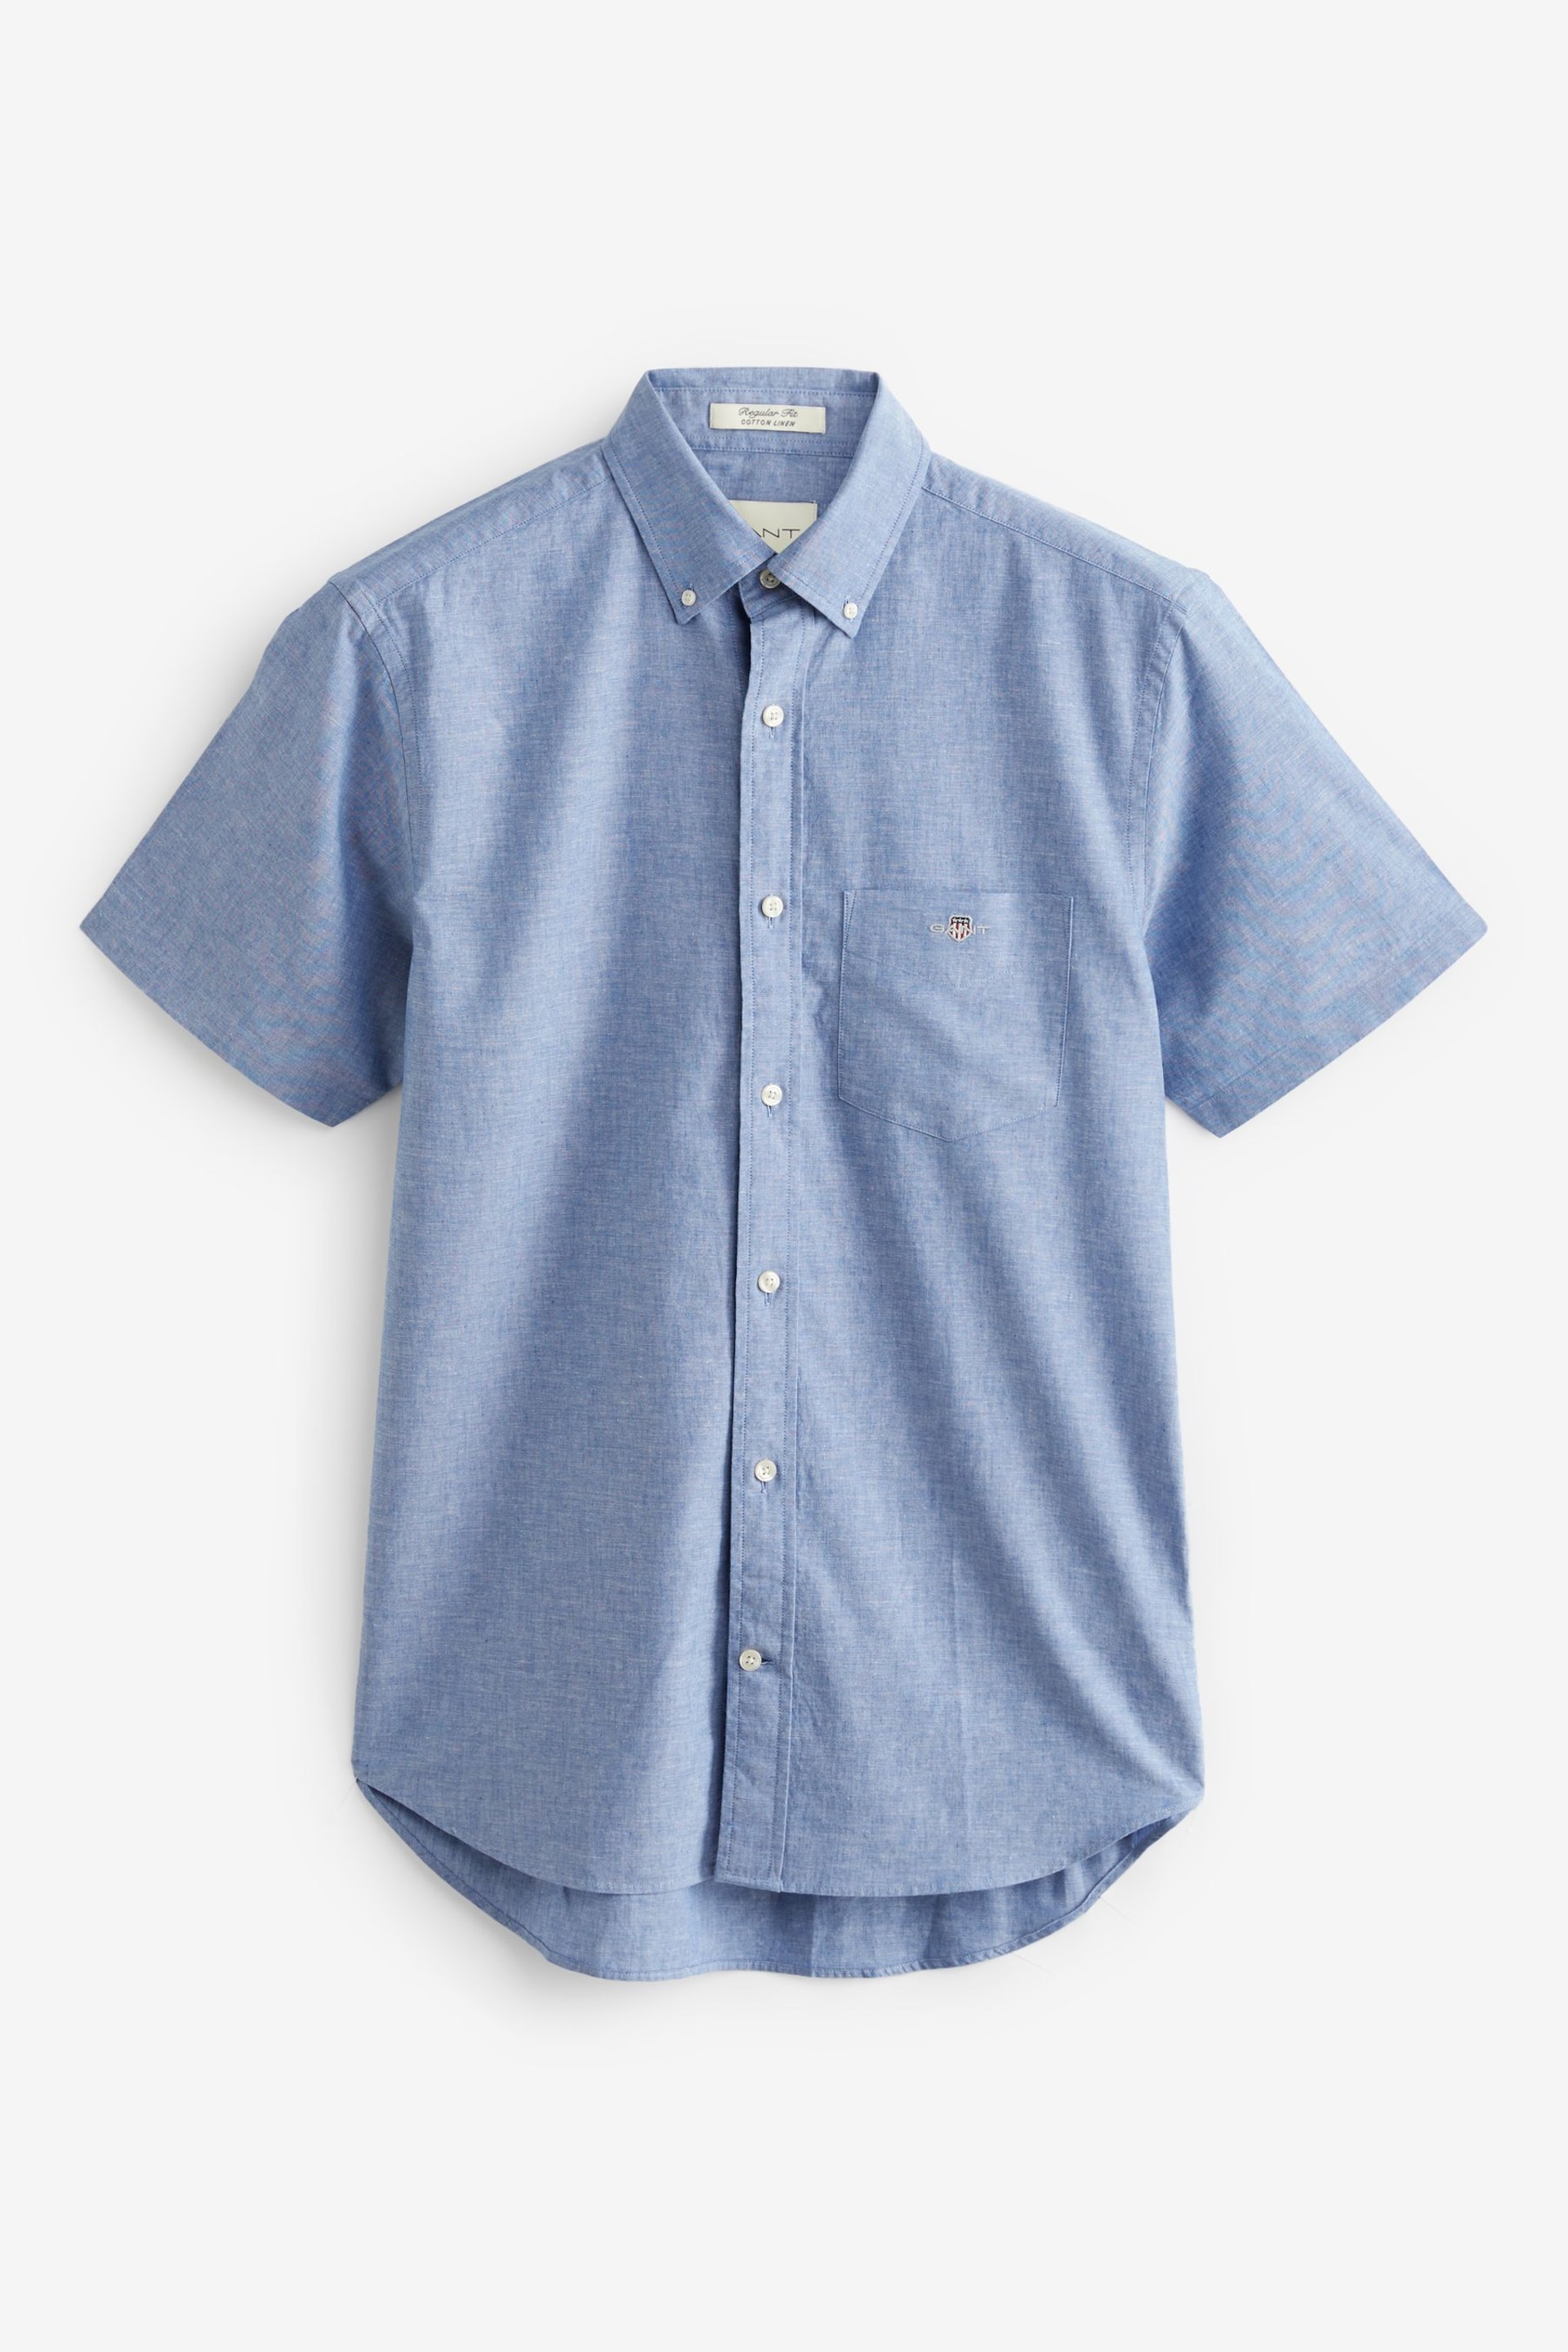 GANT Blue Regular Fit Cotton Linen Short Sleeve Shirt - Image 5 of 5